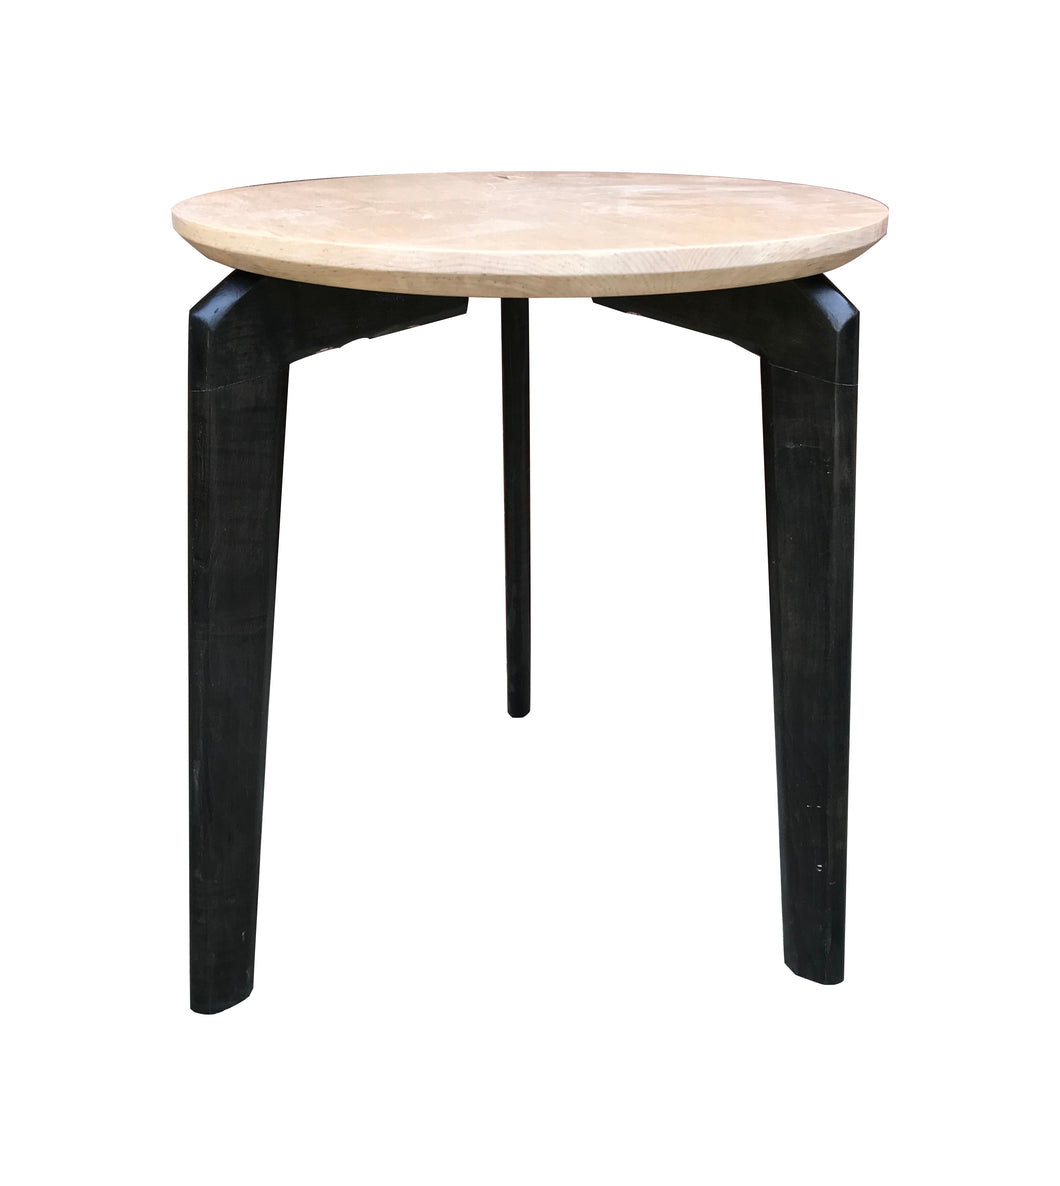 Side Table Modern Round by CW Furniture Walnut Maple Birch Oak Custom Handmade End Table Accent Three Leg Living Room Bedroom